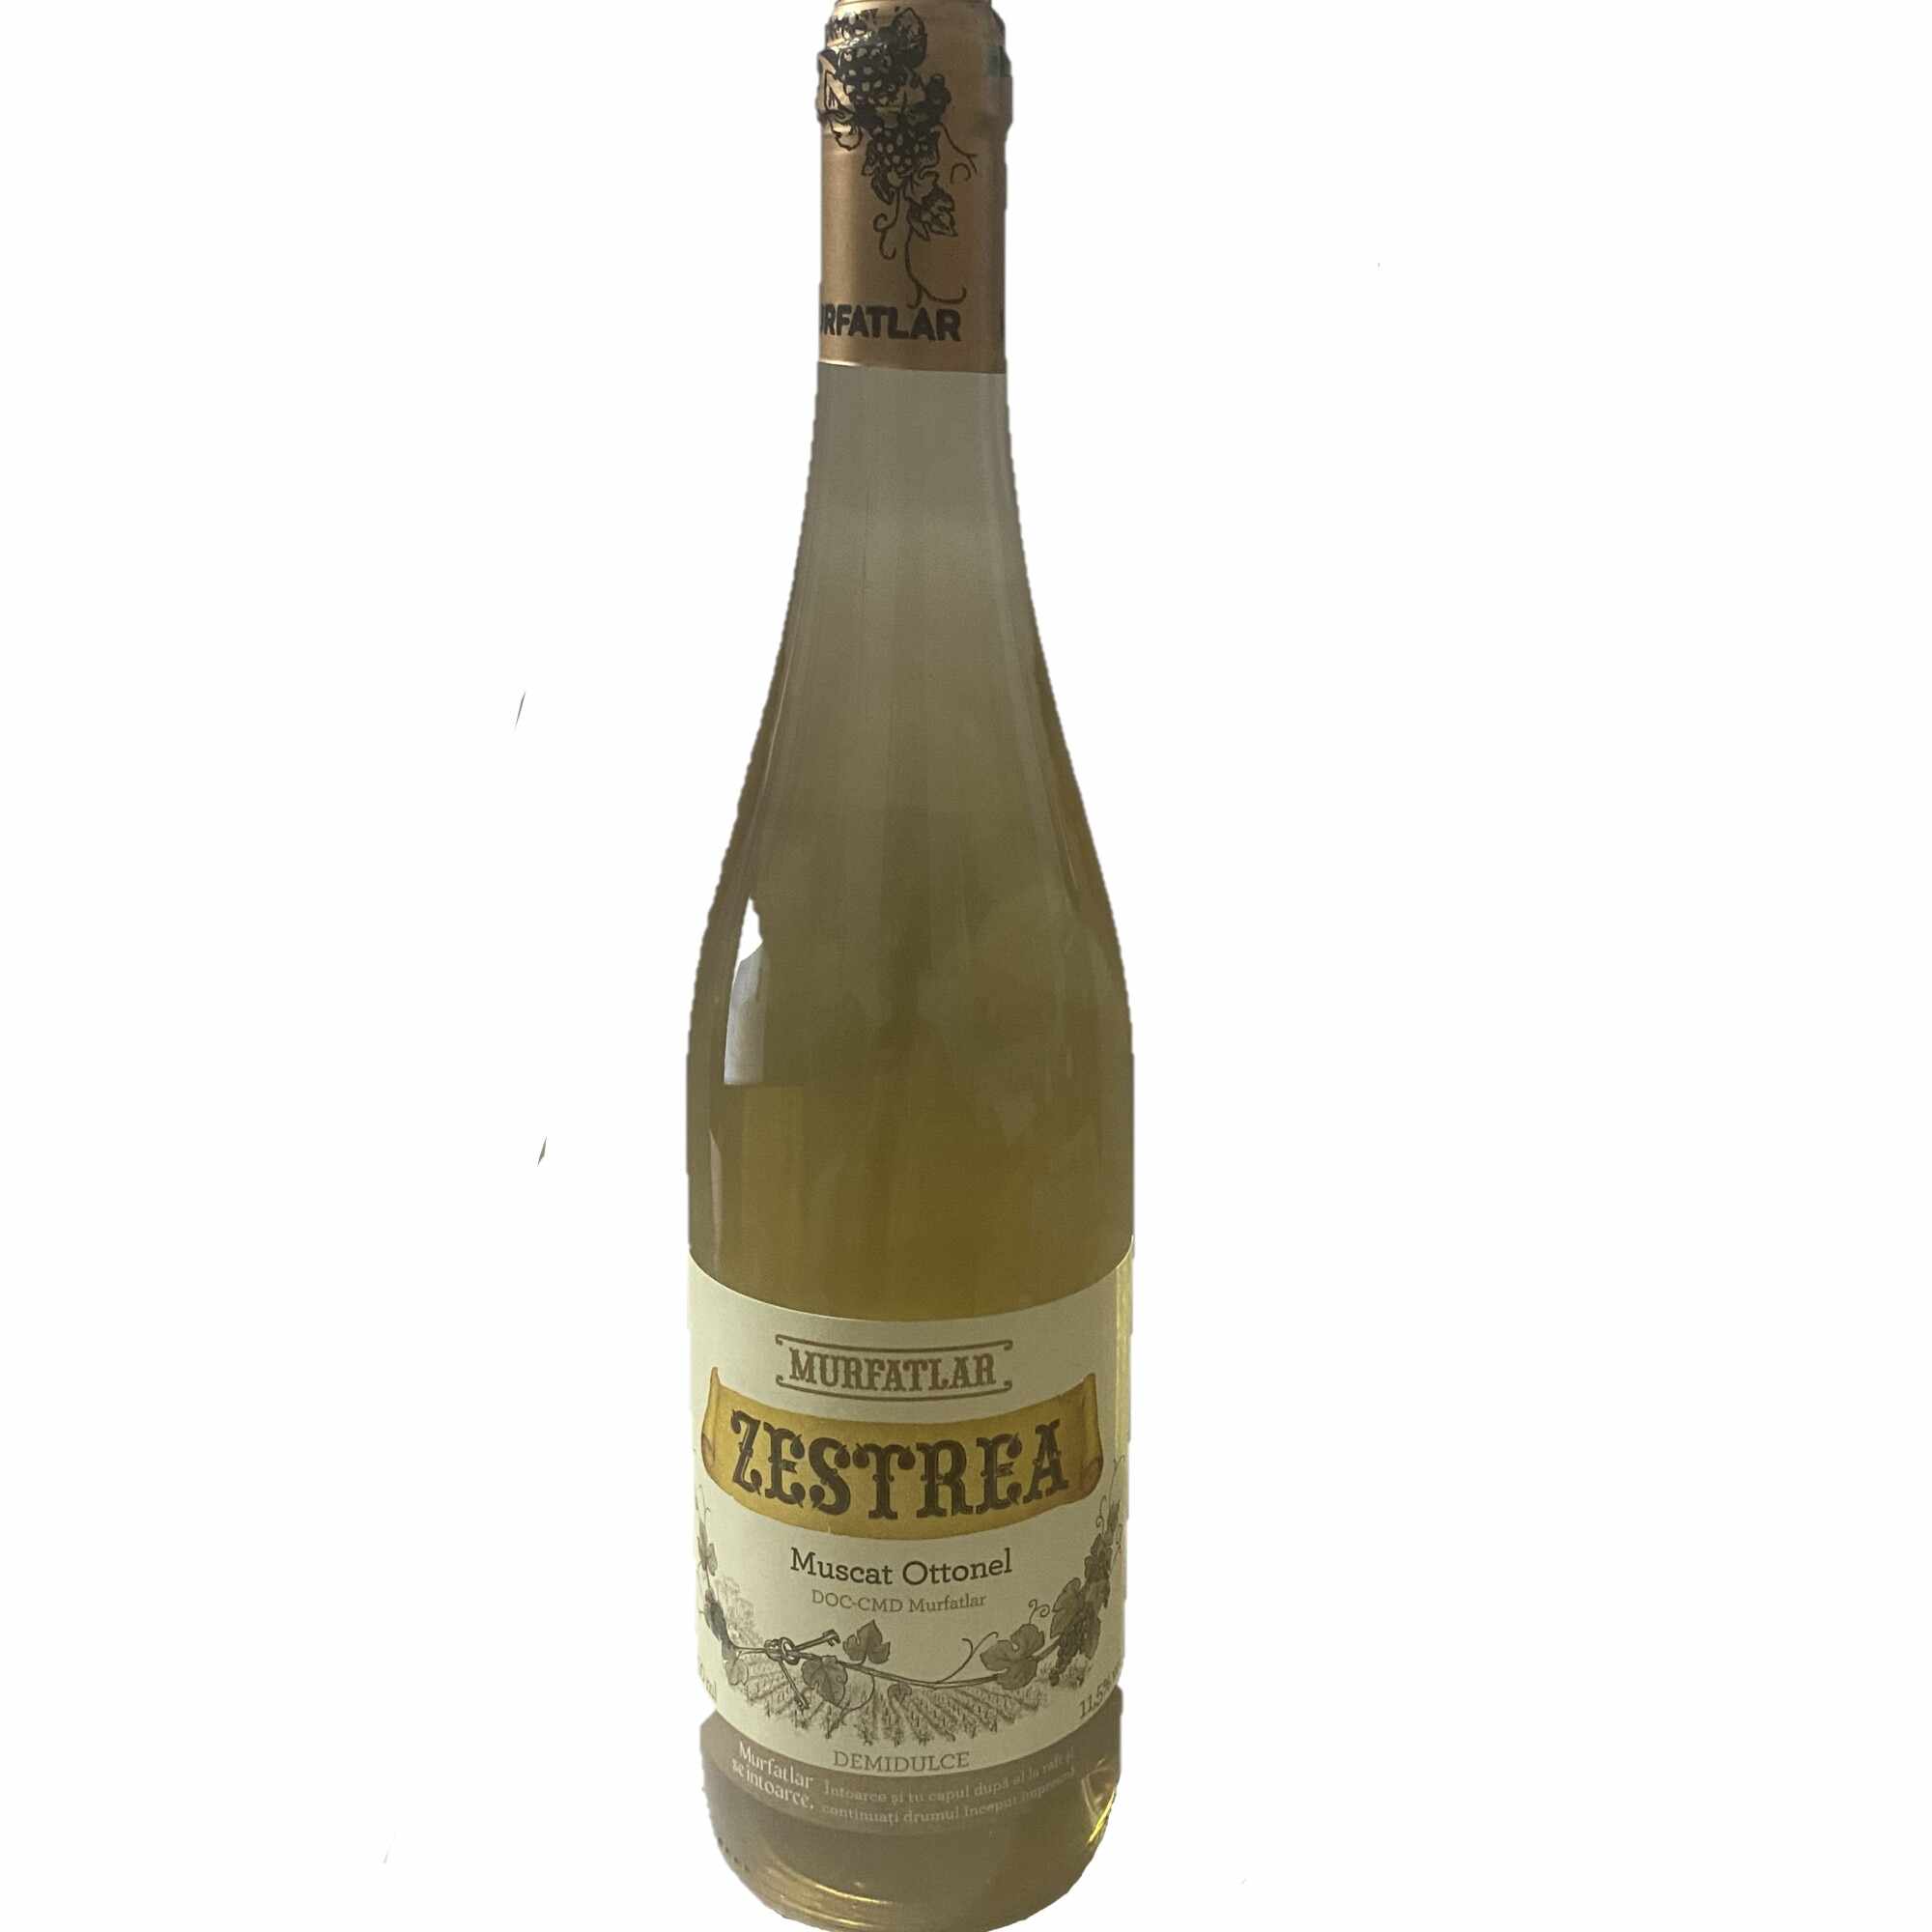 Vin alb Zestrea Muscat Ottonel productie an 2020, 750 ml, 11,5%vol, demidulce DOC-CMD Murfatlar